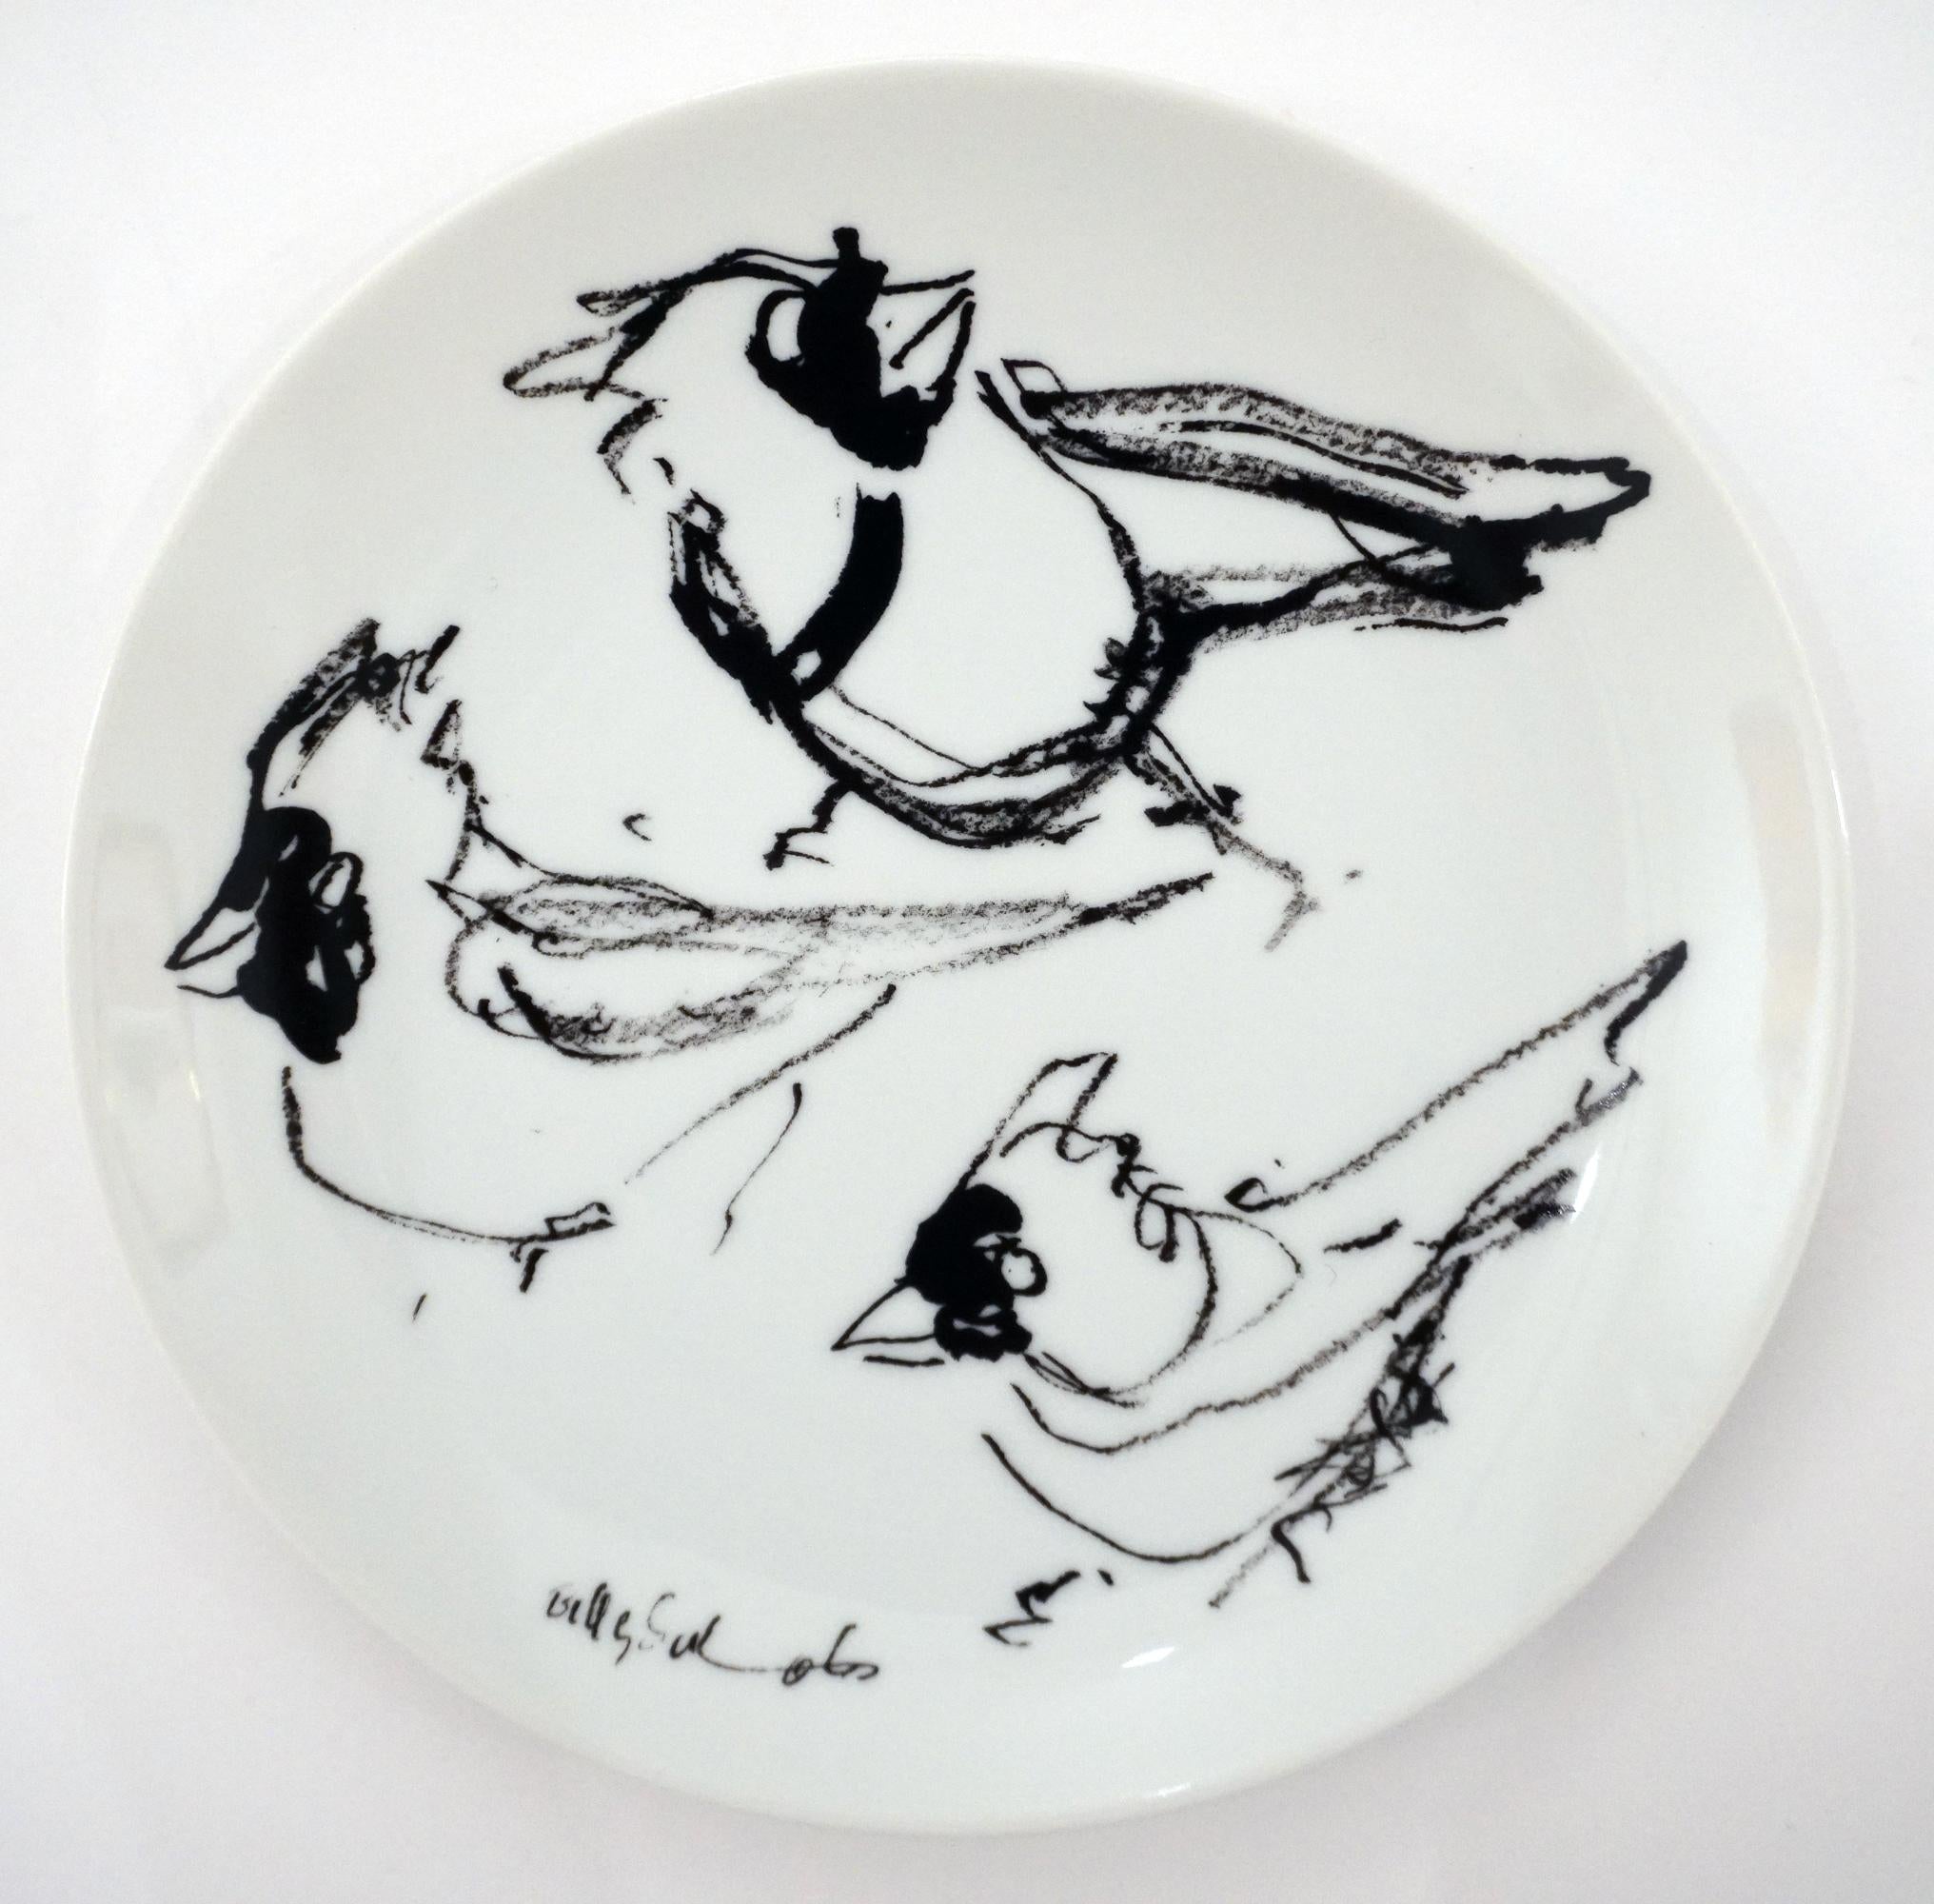 Set of 4 Cardinals Plates - Gray Animal Print by Billy Sullivan (b.1946)